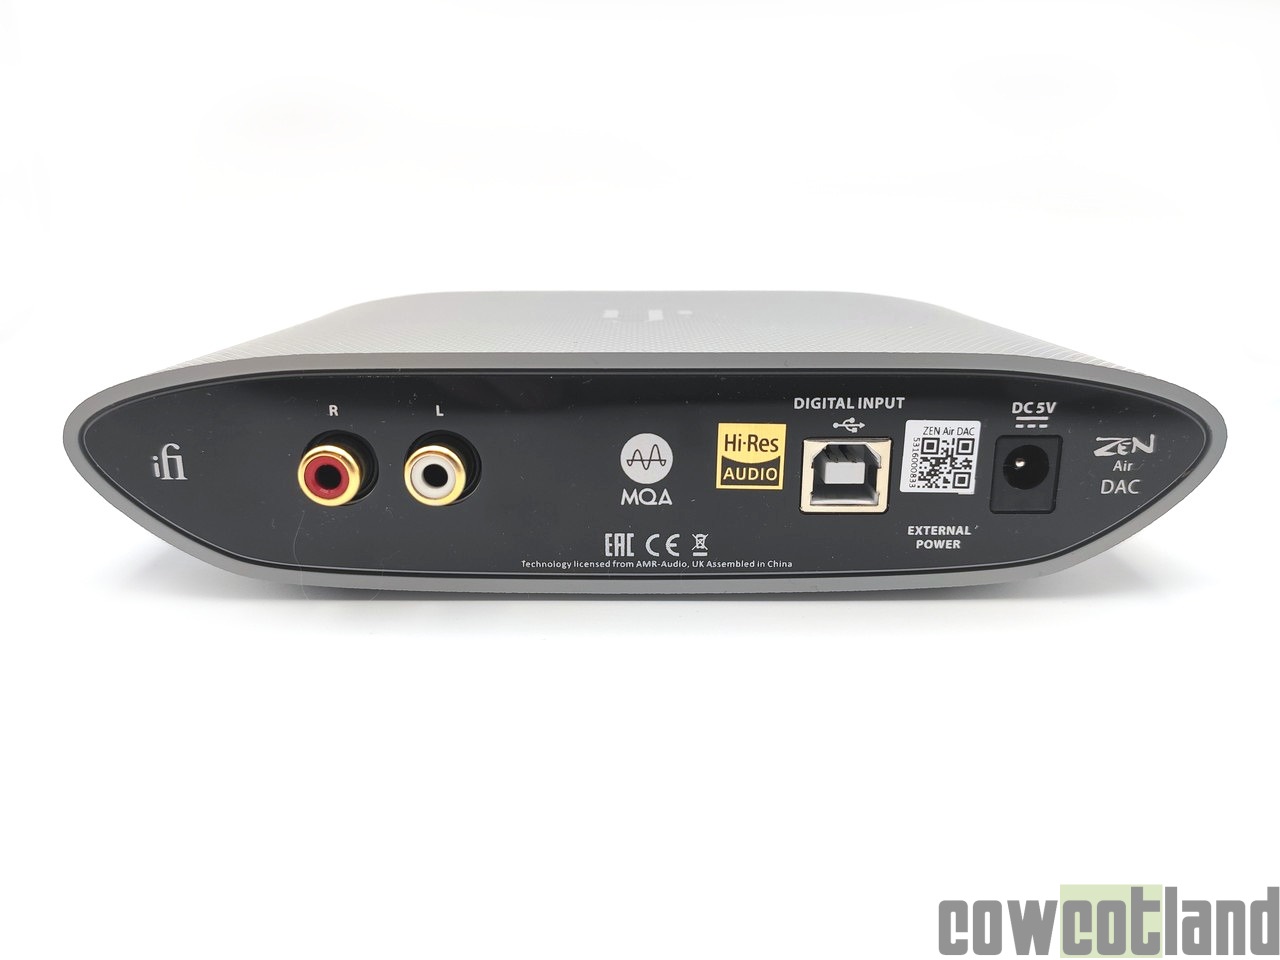 Image 48273, galerie Test iFi Audio ZEN Air DAC, enfin de lentre de gamme chez iFi Audio !